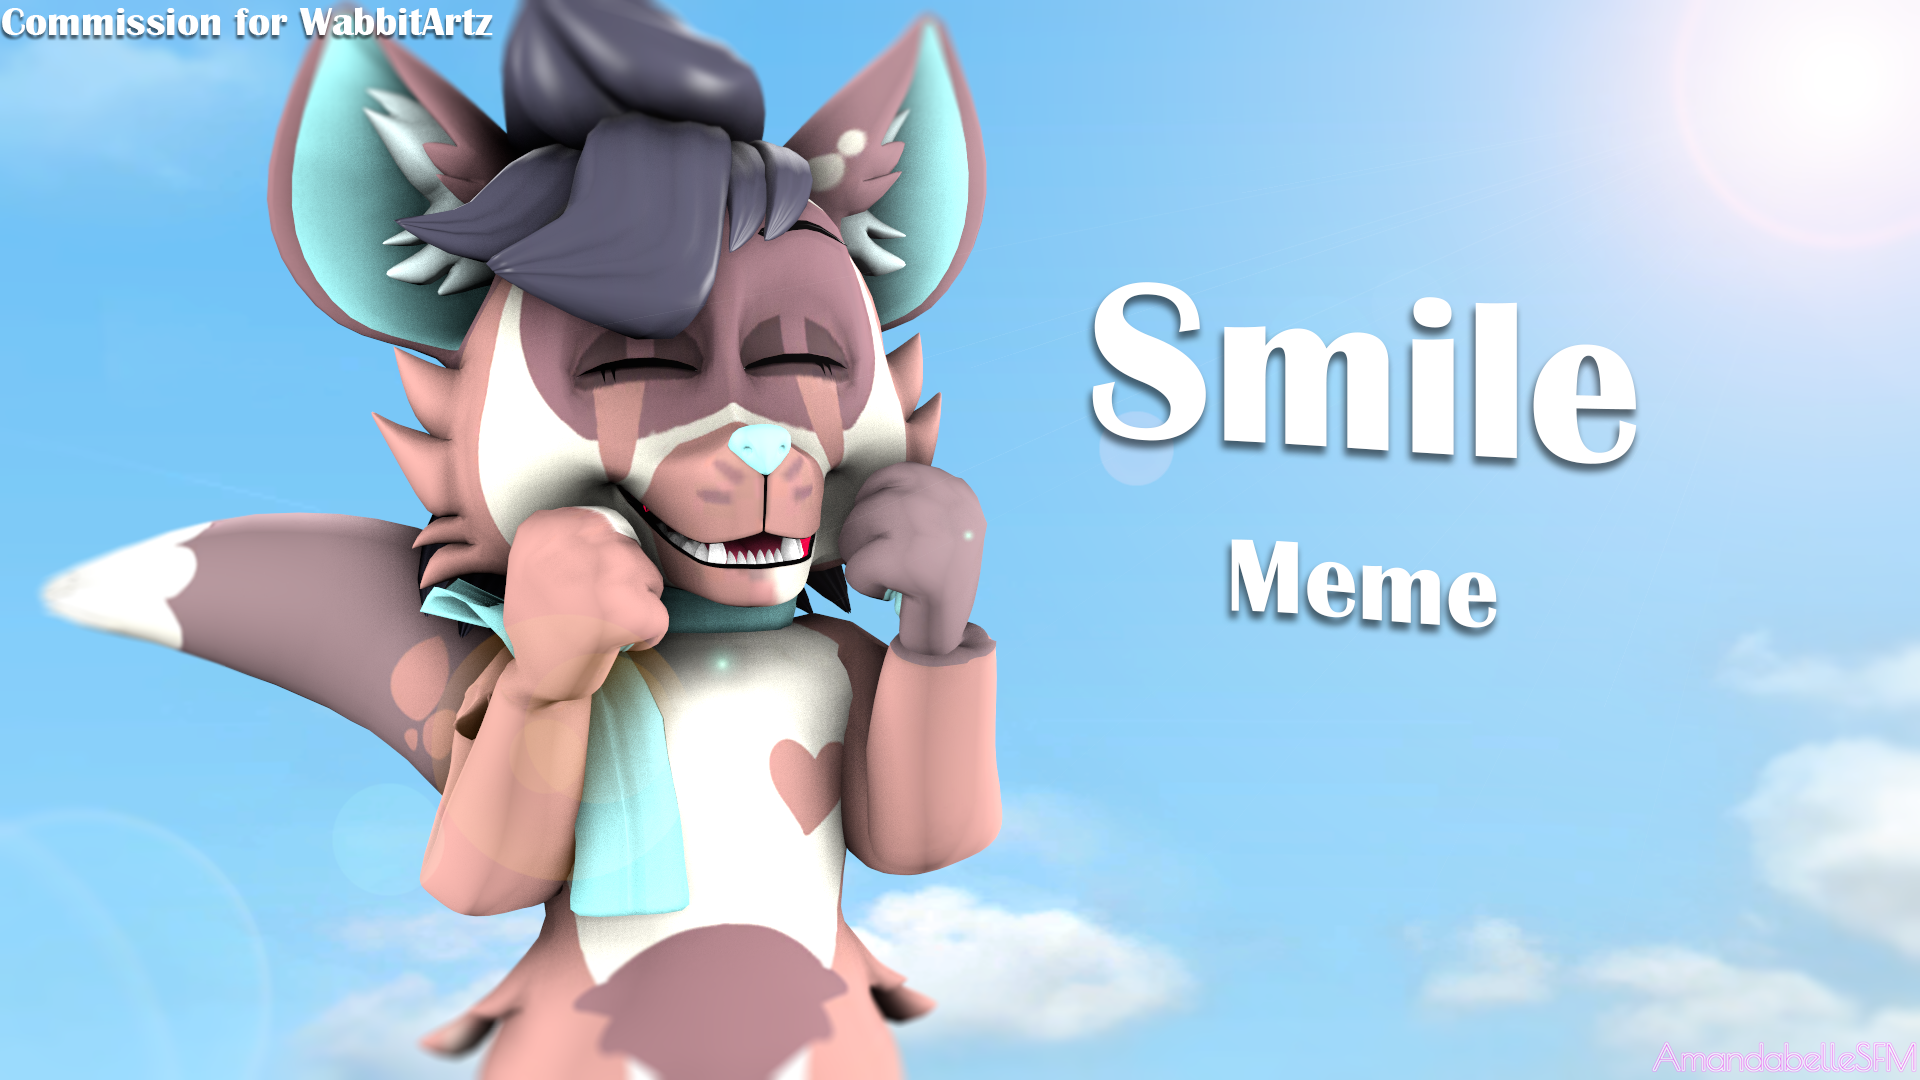 Commission] Smile | Animation Meme by AmandabelleDA on DeviantArt